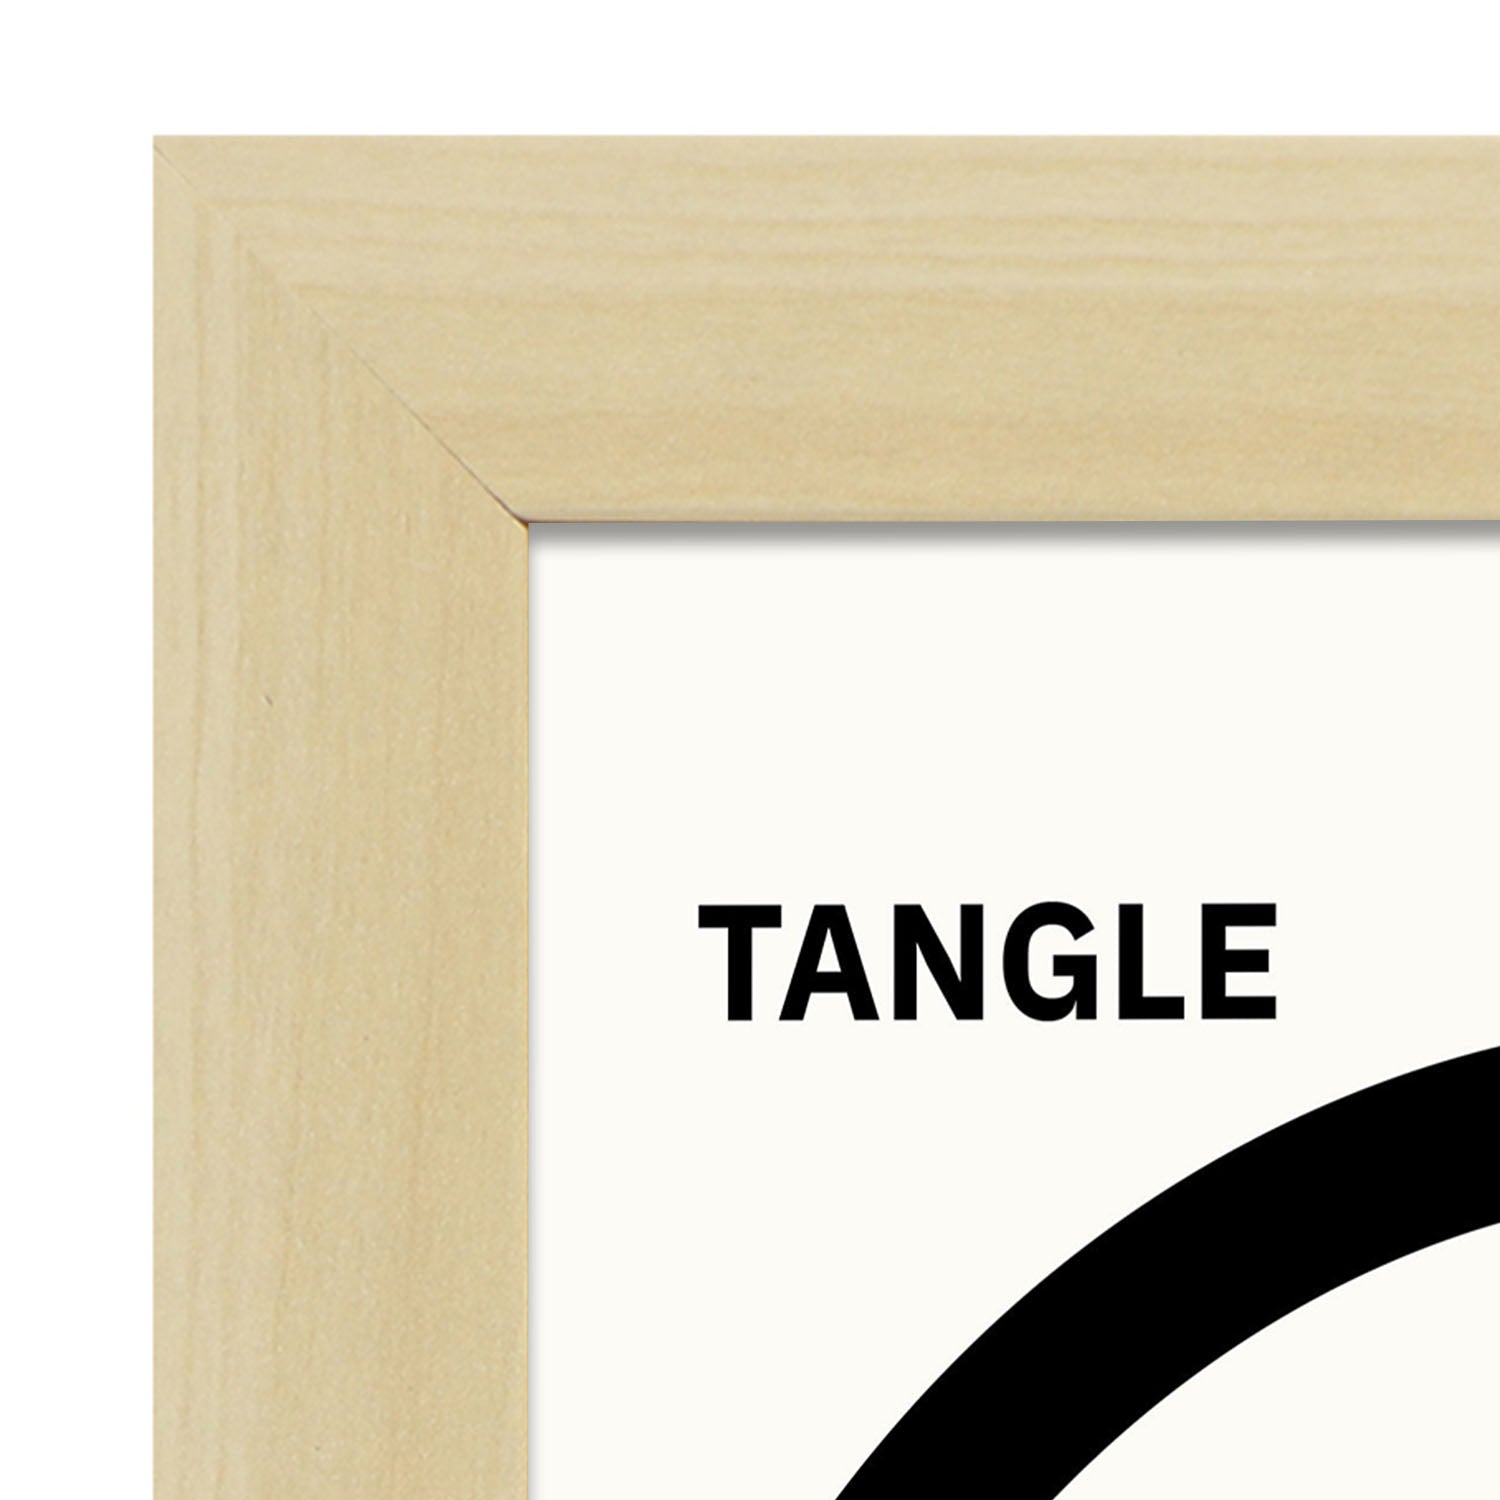 Tangle-Artwork-Nacnic-Nacnic Estudio SL